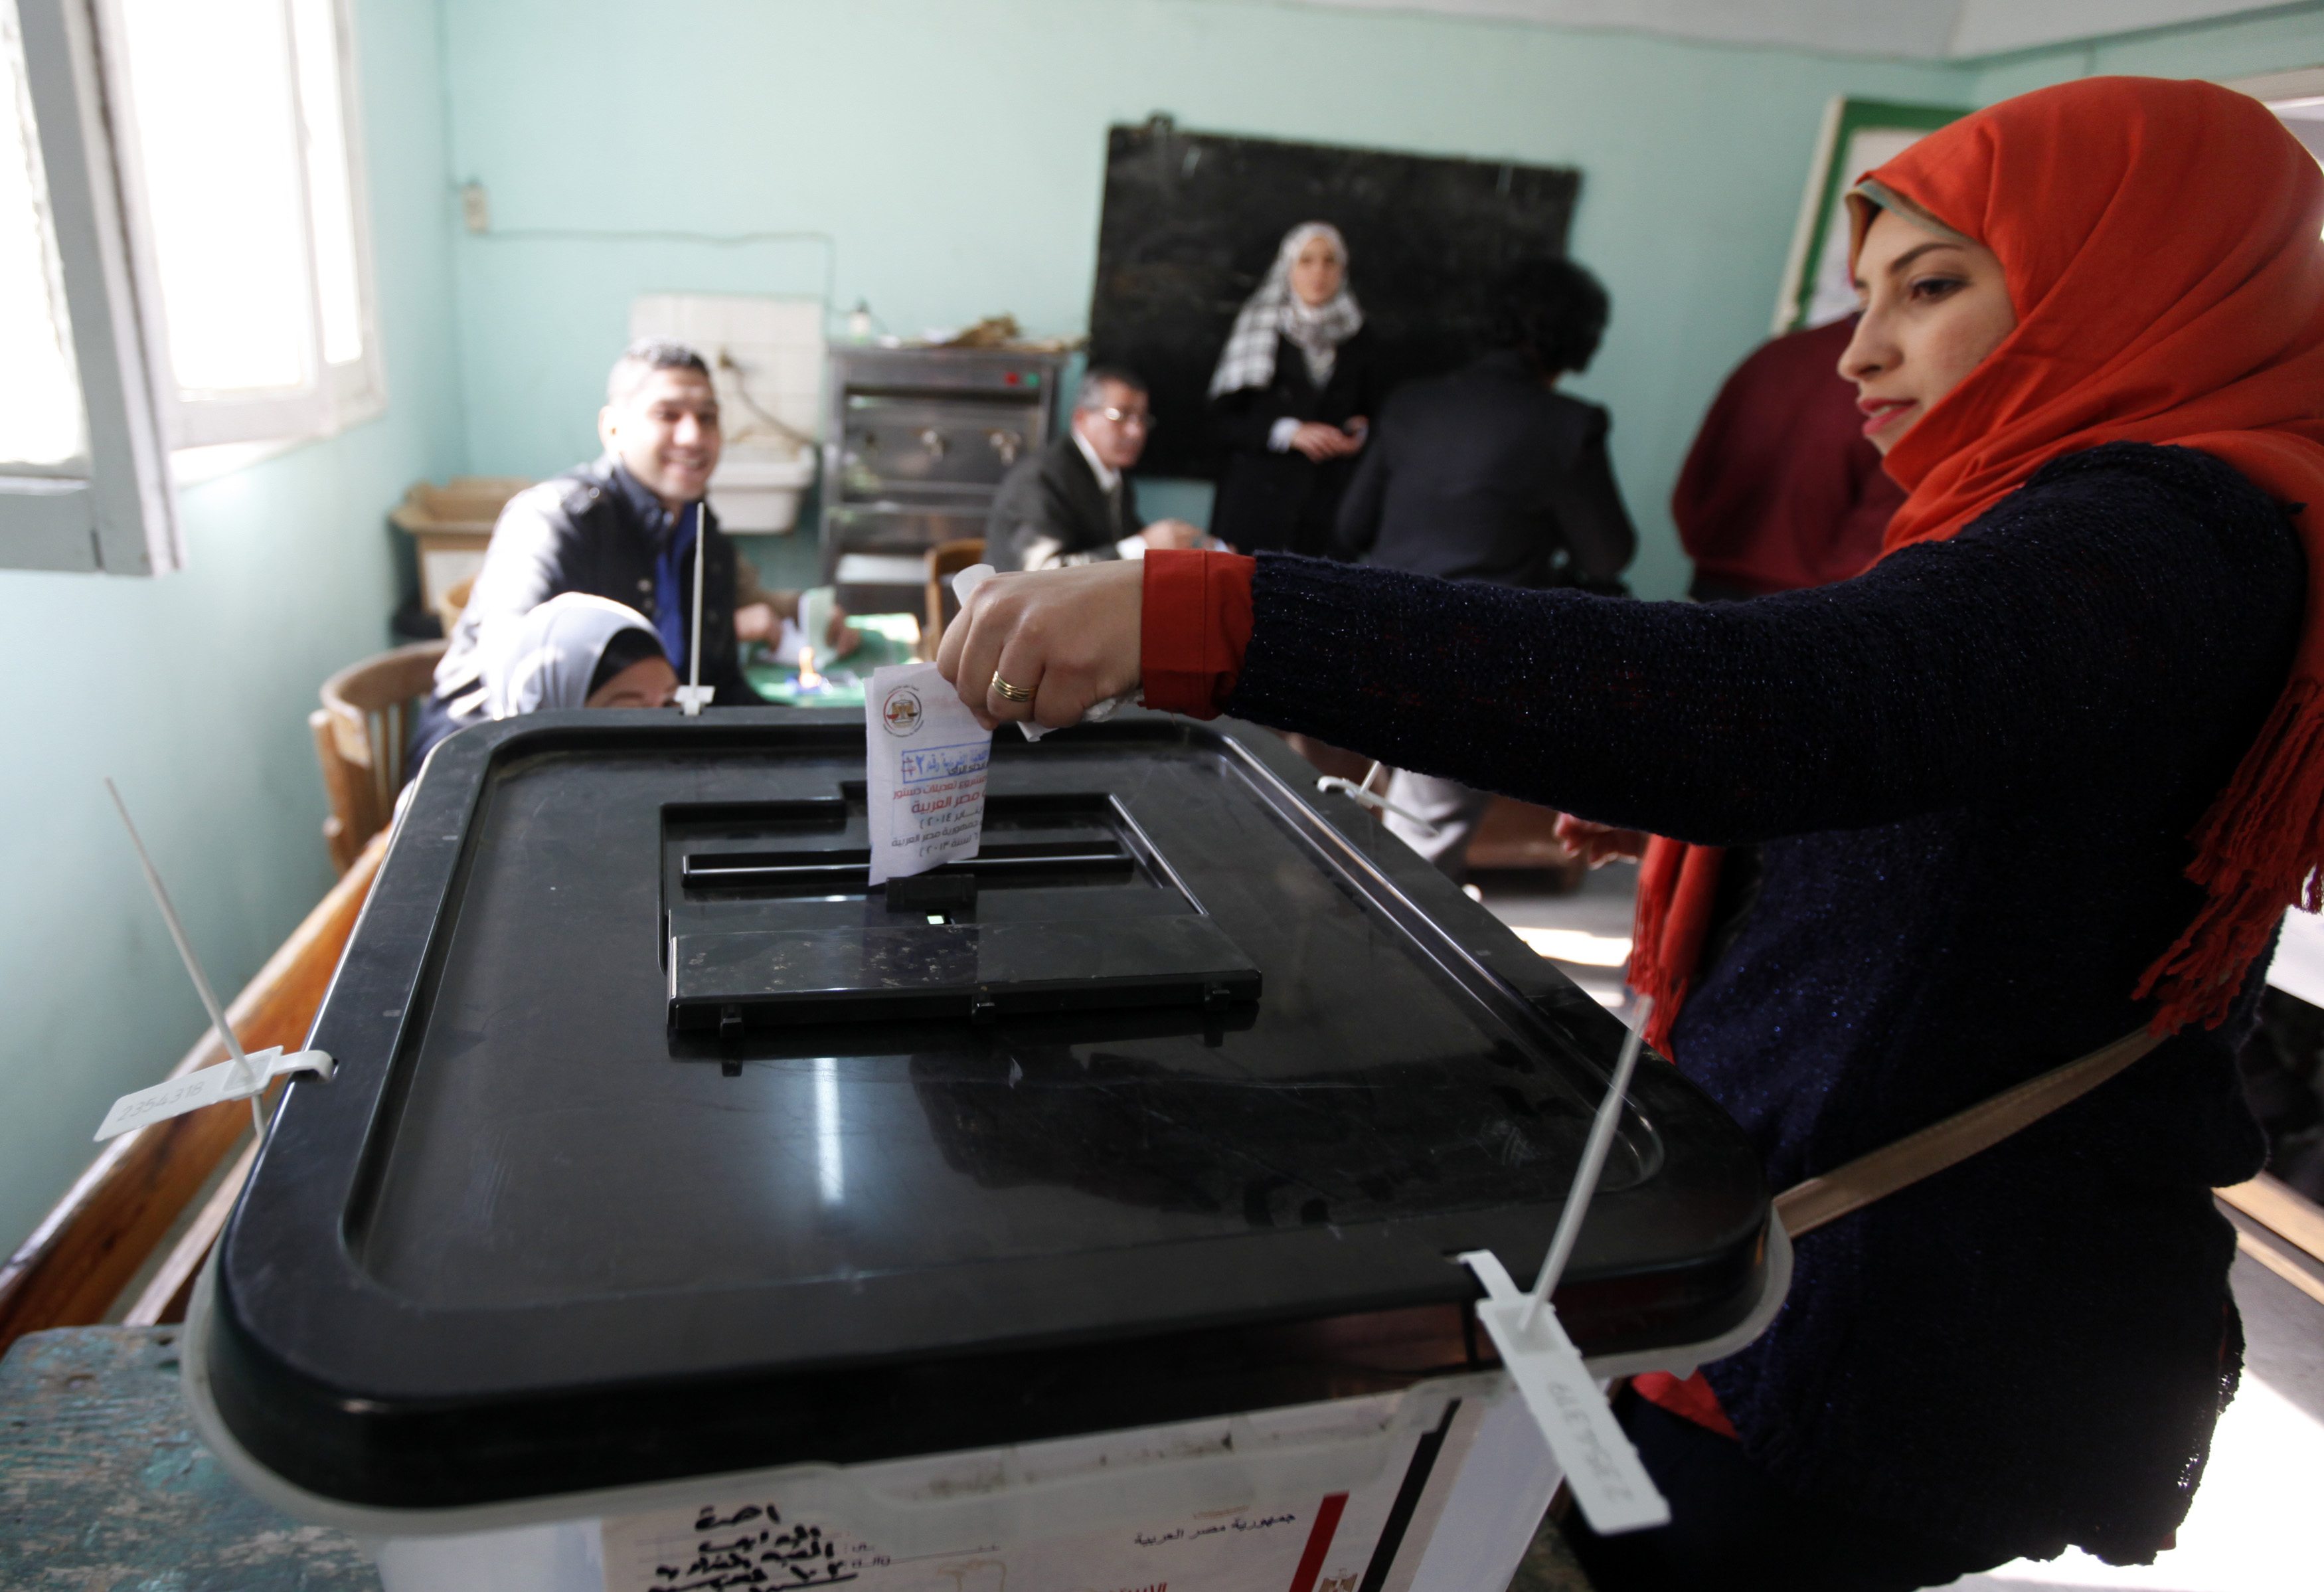 Live updates on Egypt's constitutional referendum 